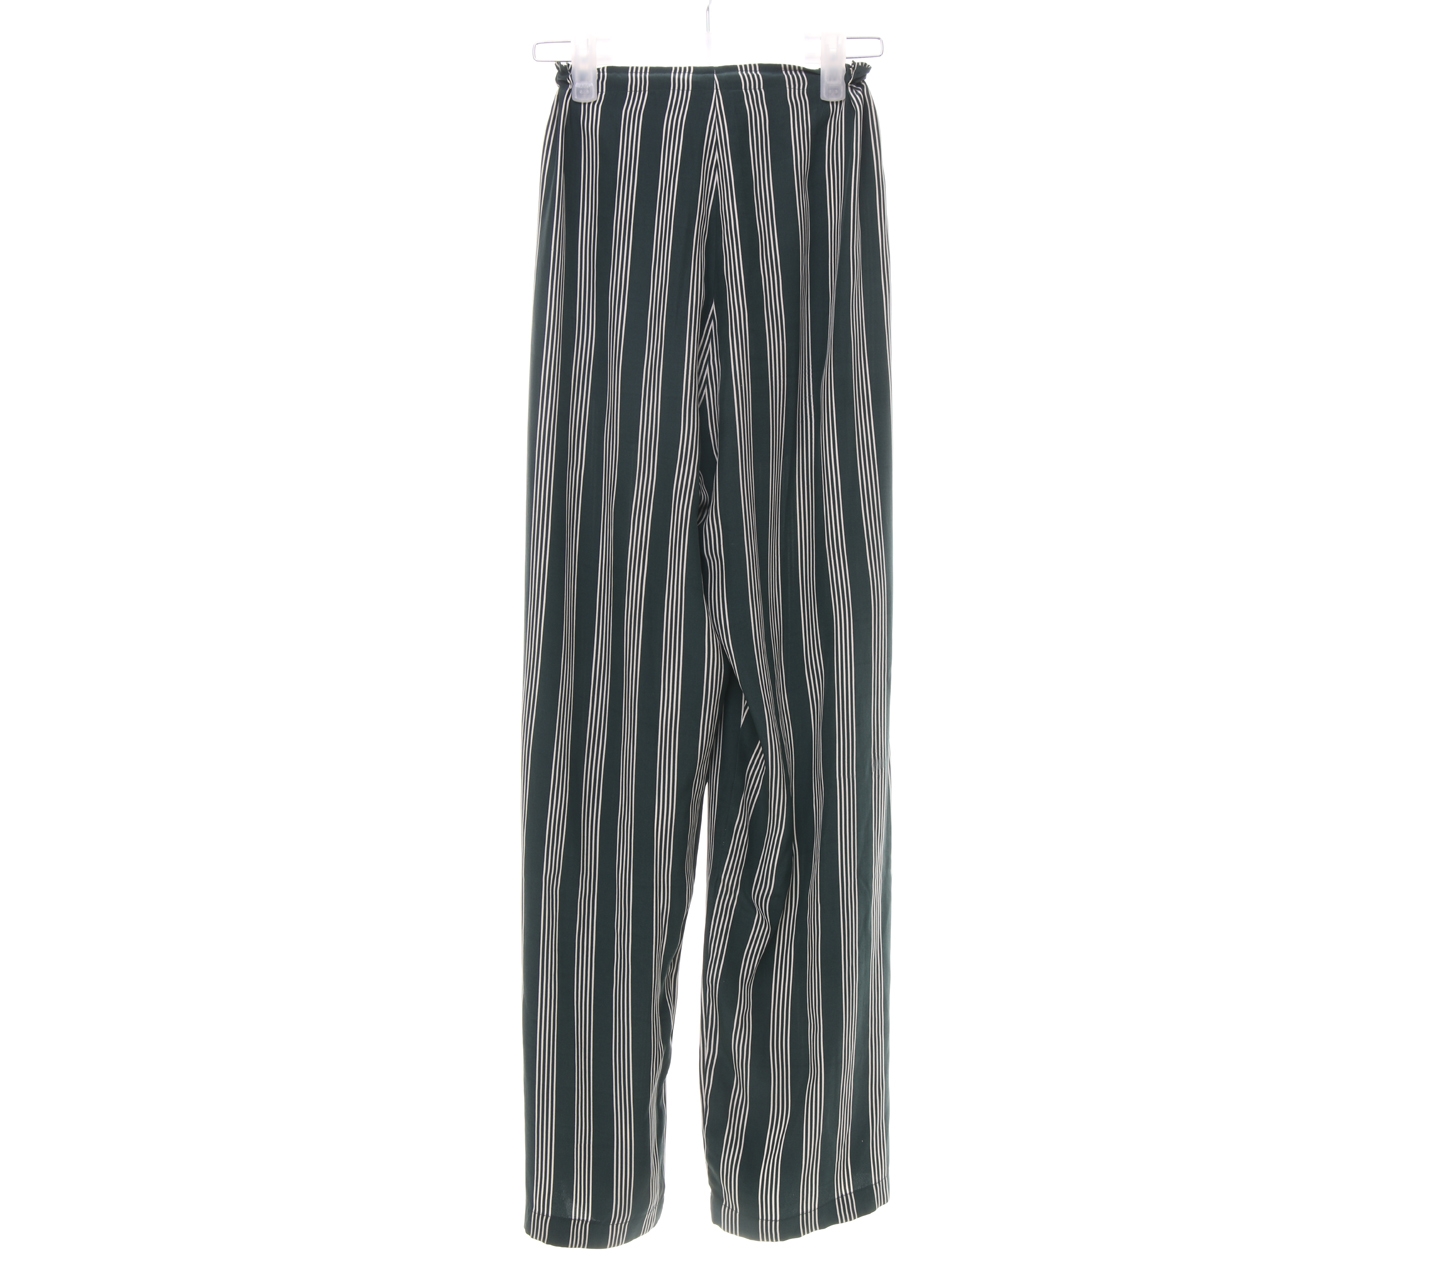 J Crew Dark Green & Off White Striped Long Pants